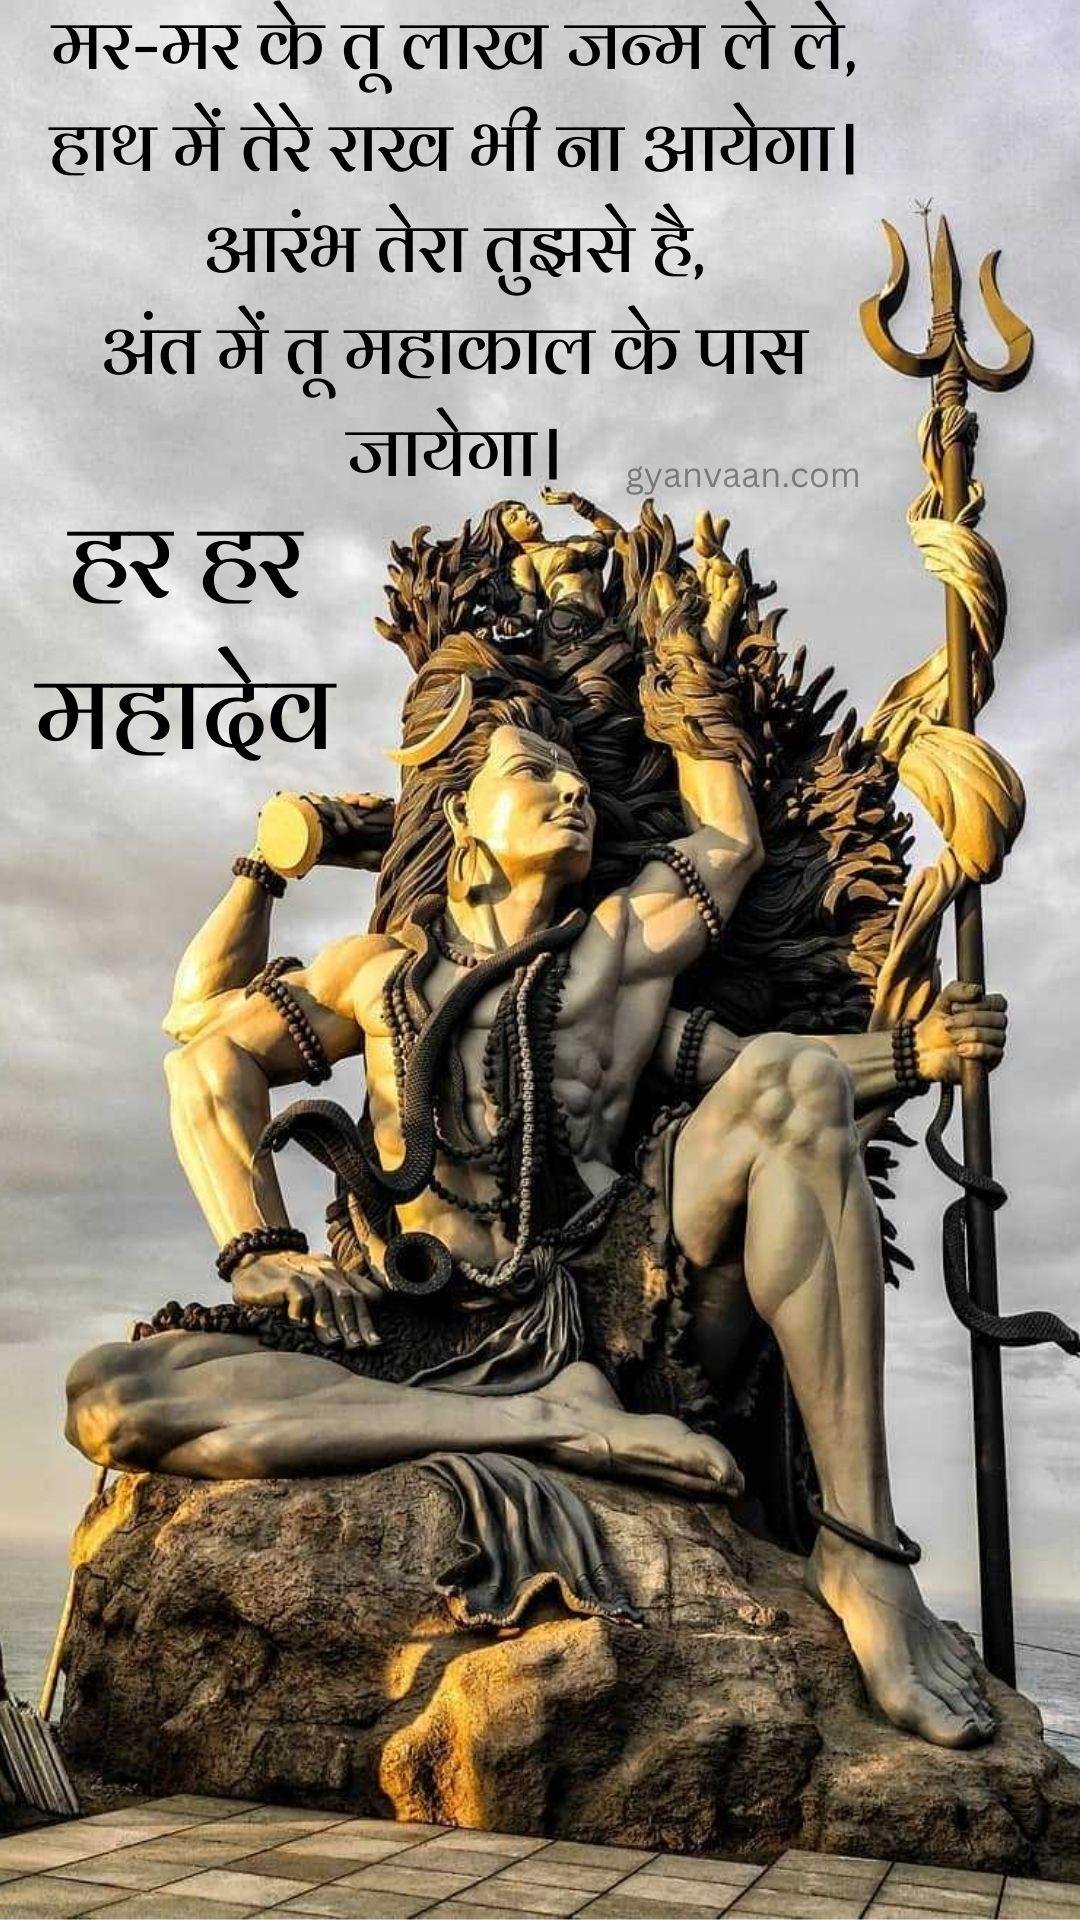 Lord Shiva Mahadev Quotes And Mahakal Status In Hindi For Mobile 20 - Shiva Quotes